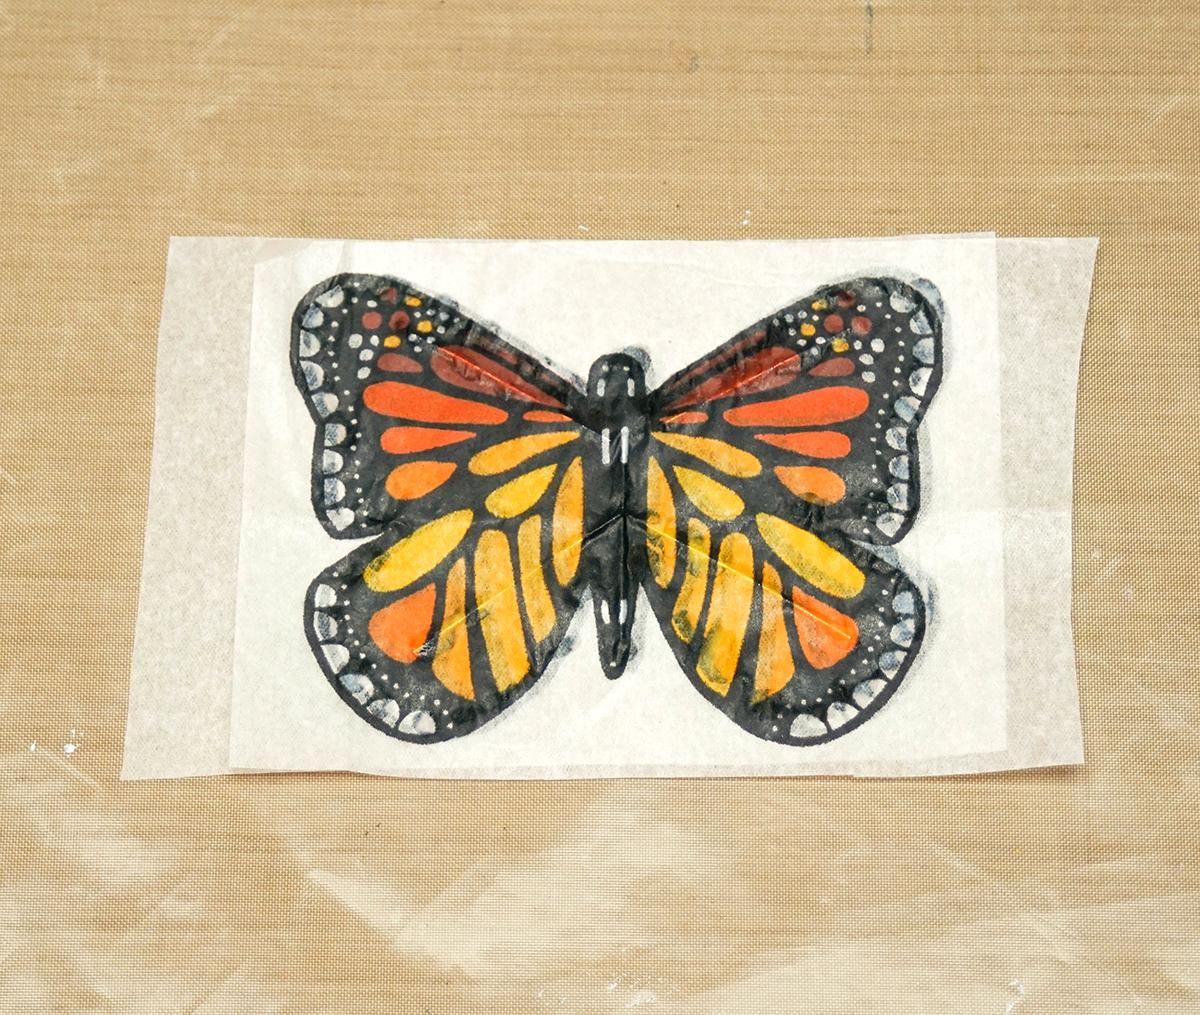 Butterfly Kite 2e.jpg